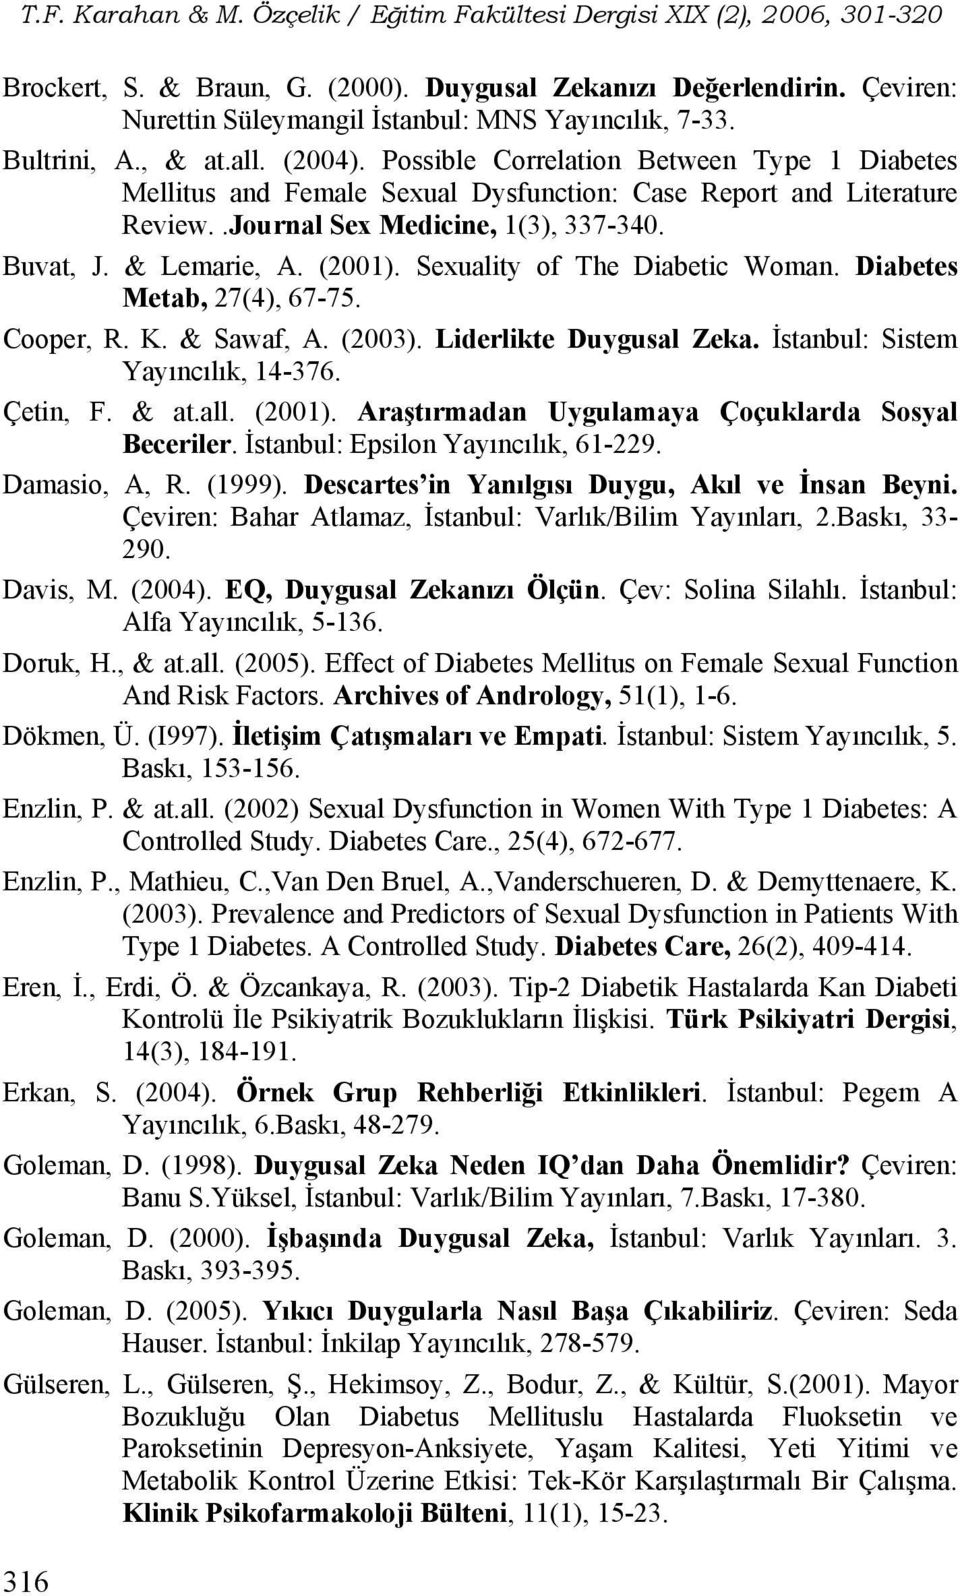 Sexuality of The Diabetic Woman. Diabetes Metab, 27(4), 67-75. Cooper, R. K. & Sawaf, A. (2003). Liderlikte Duygusal Zeka. İstanbul: Sistem Yayıncılık, 14-376. Çetin, F. & at.all. (2001).